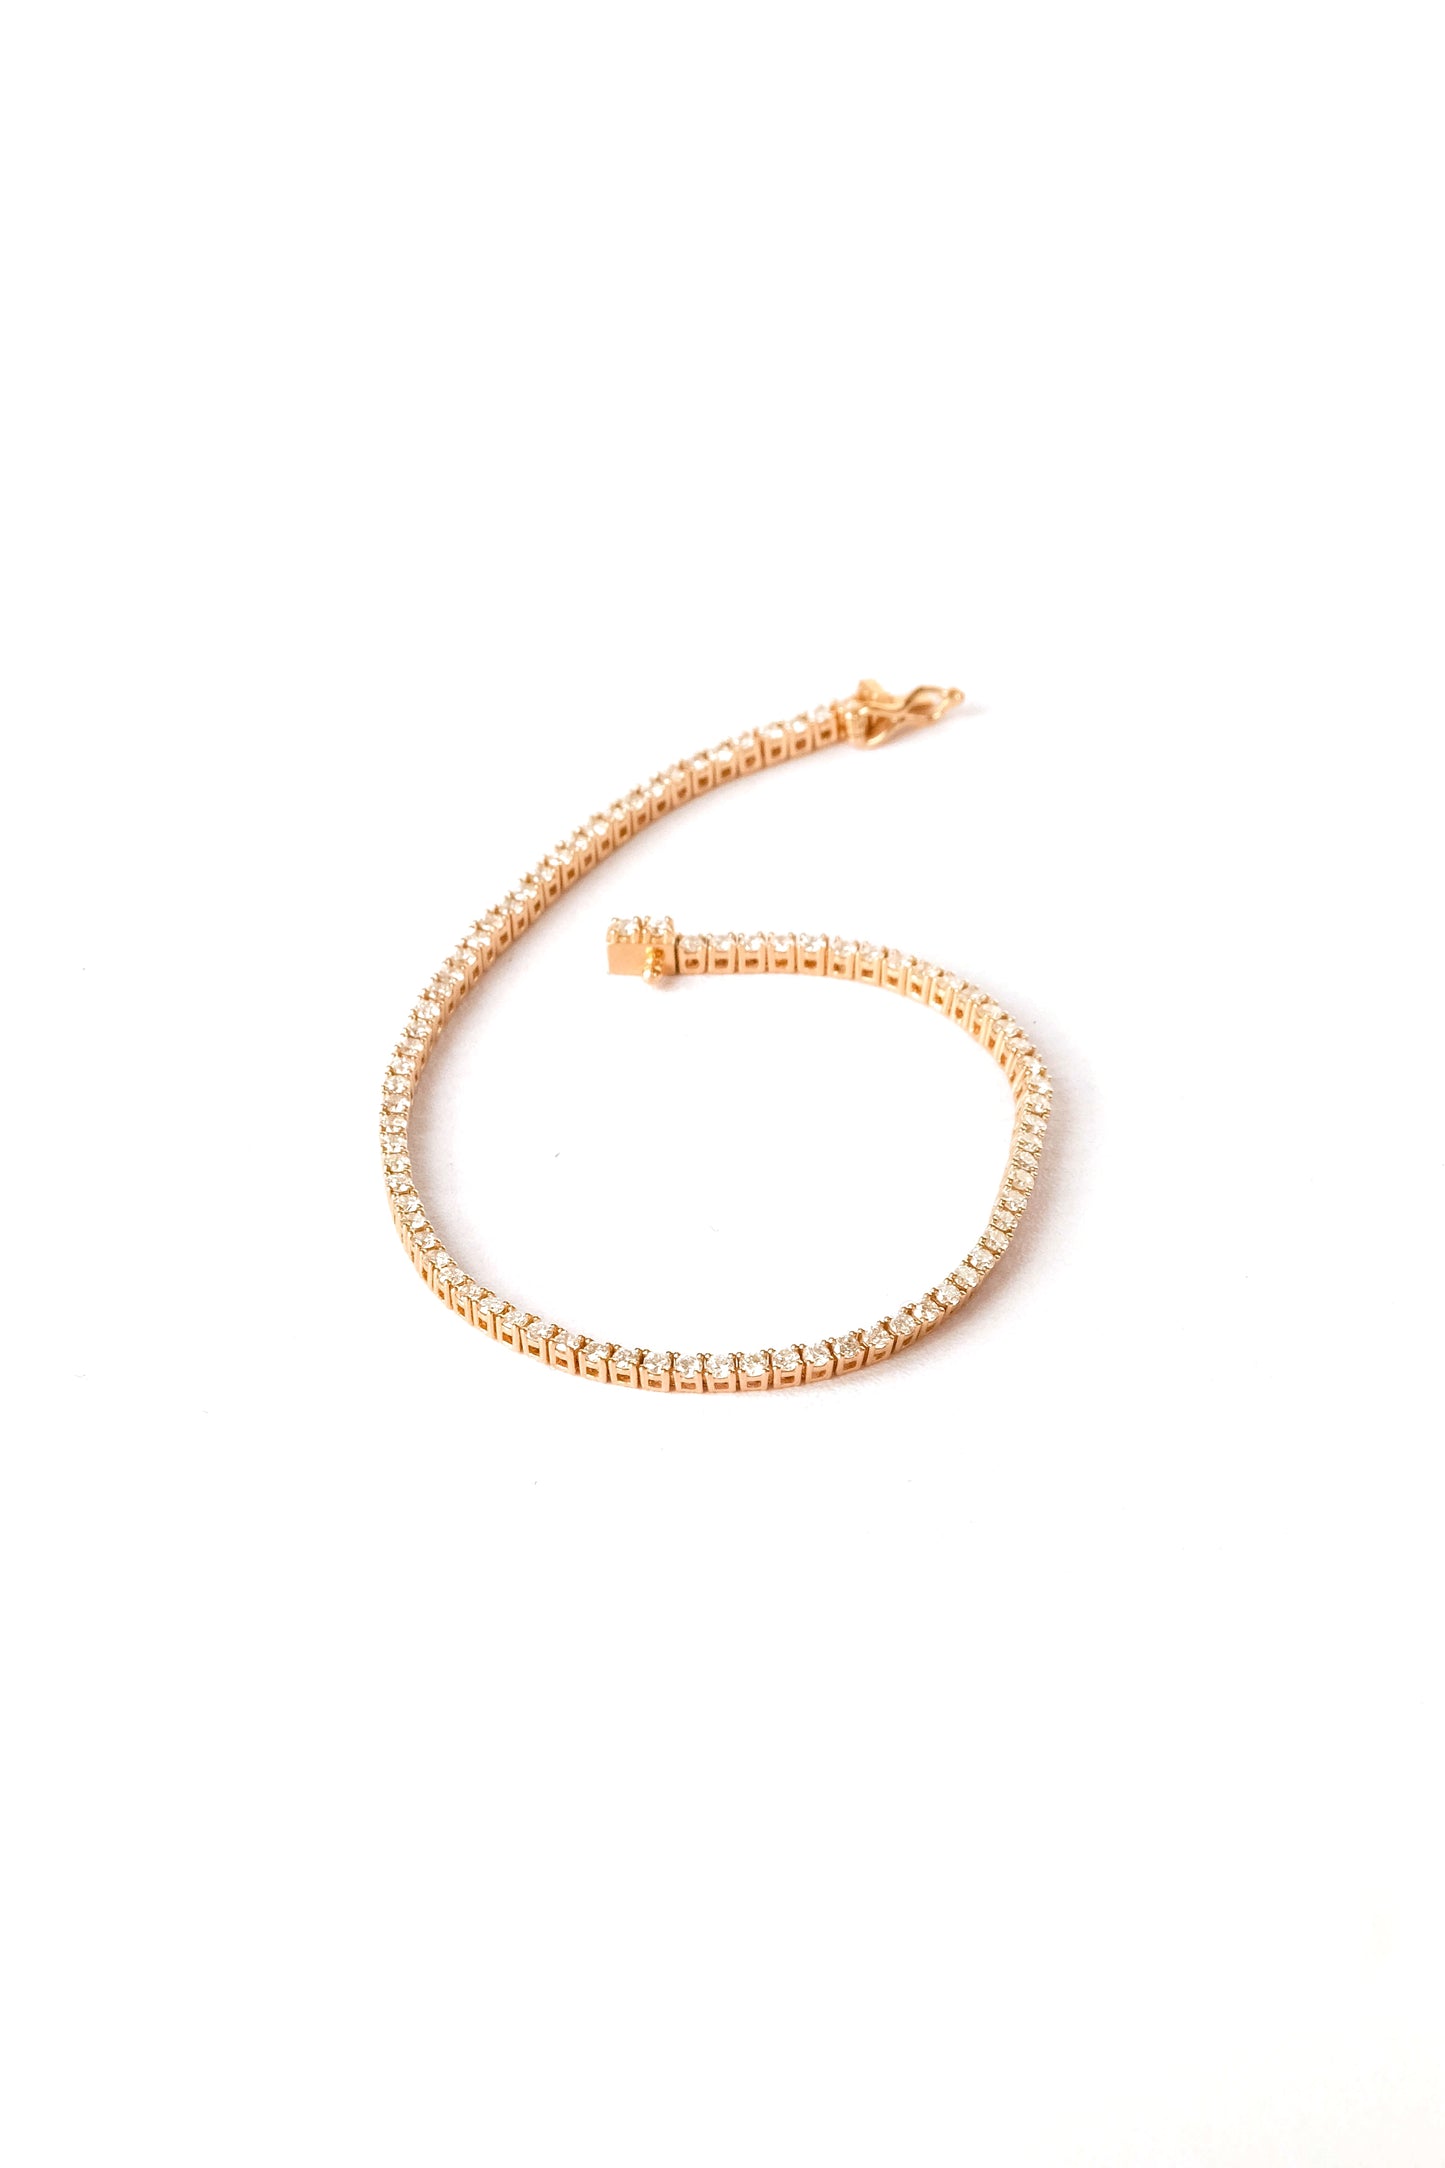 Pink gold & diamond “tennis” bracelet